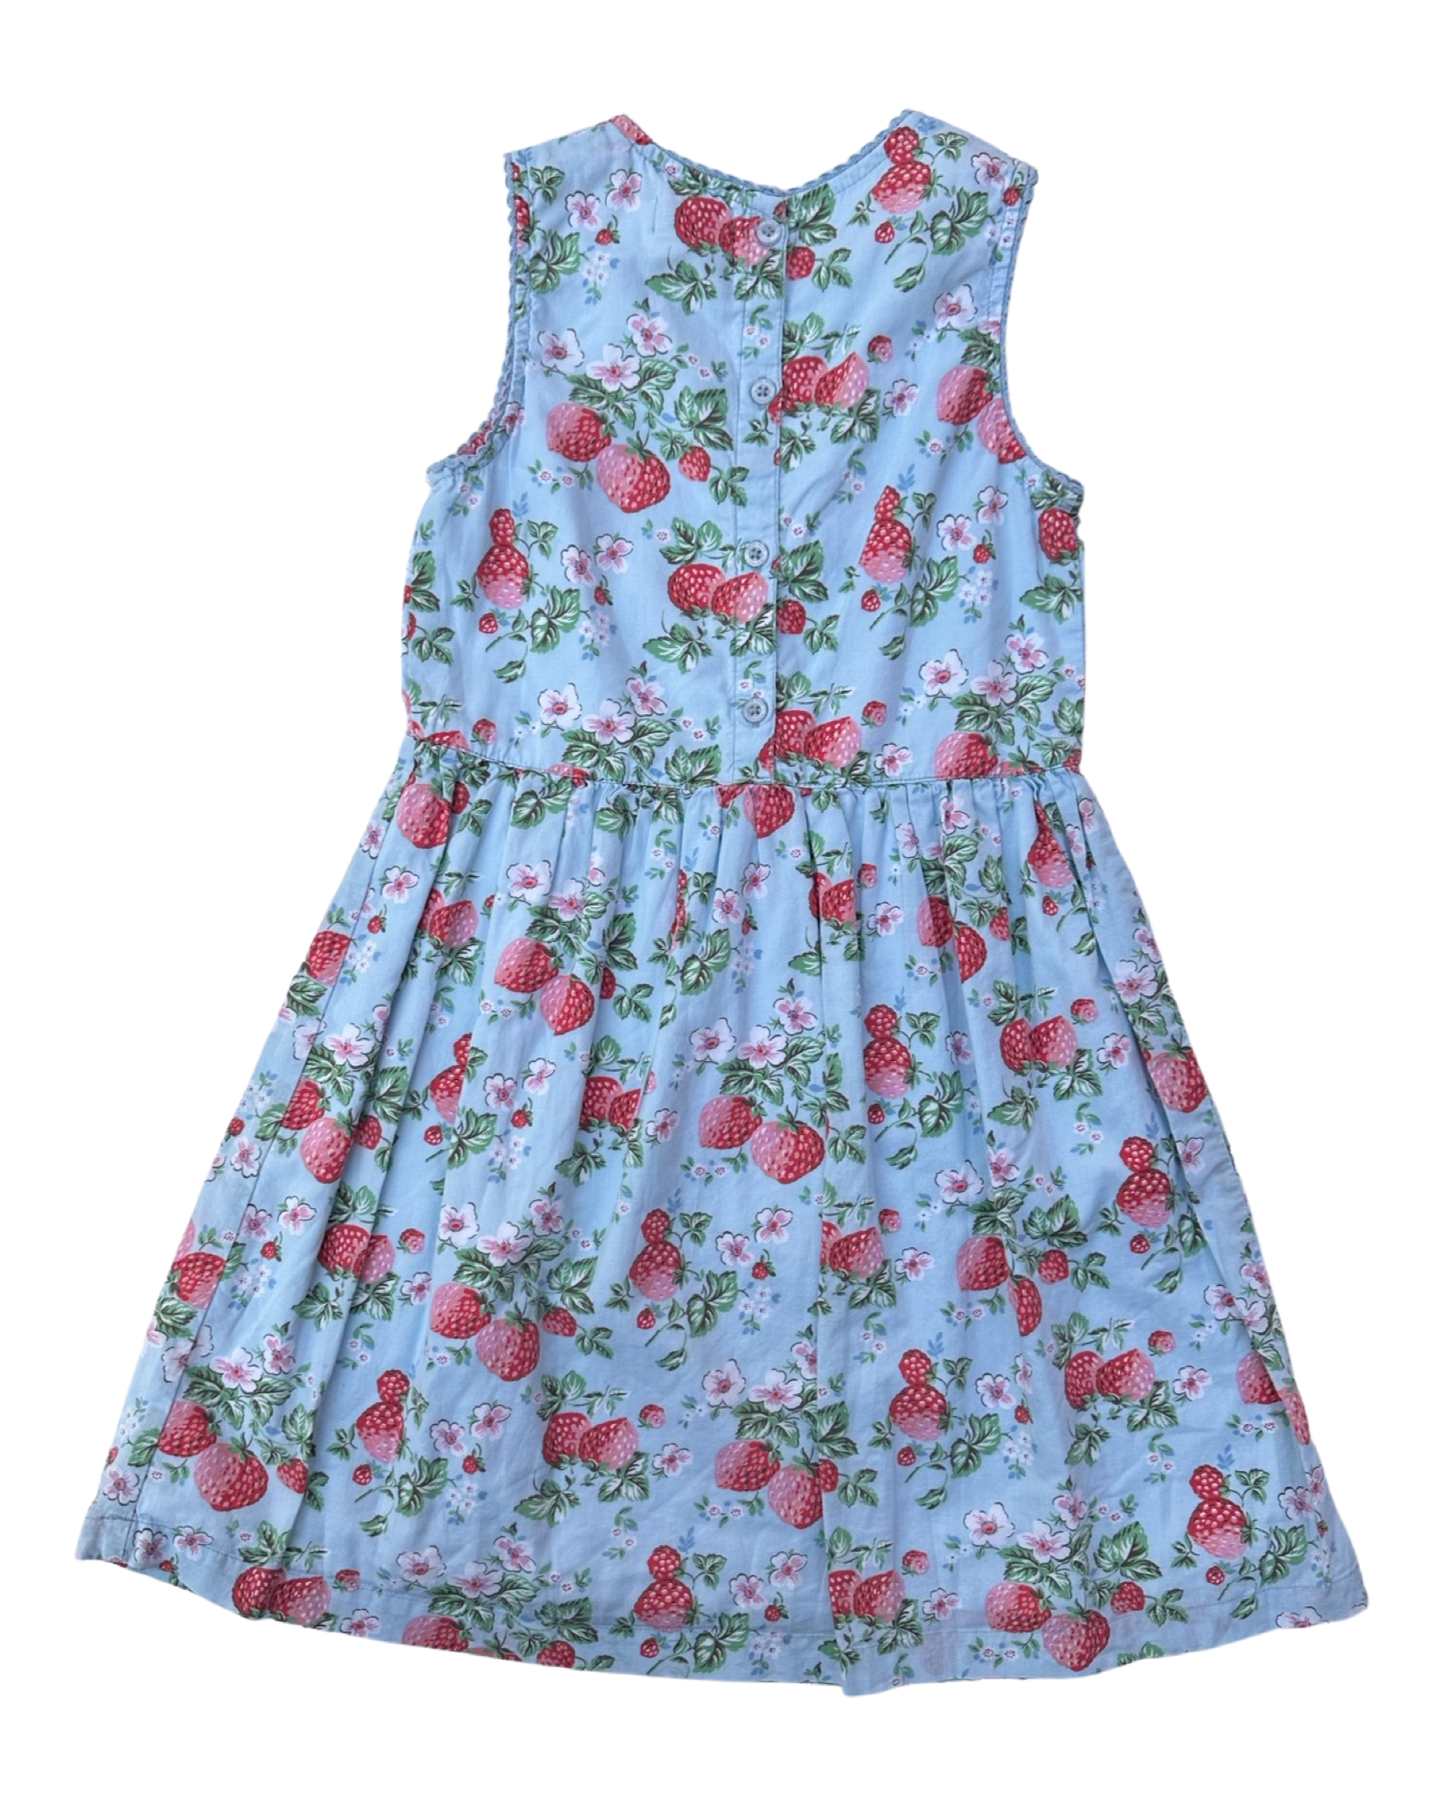 Cath Kids strawberry print dress (size 6yrs)